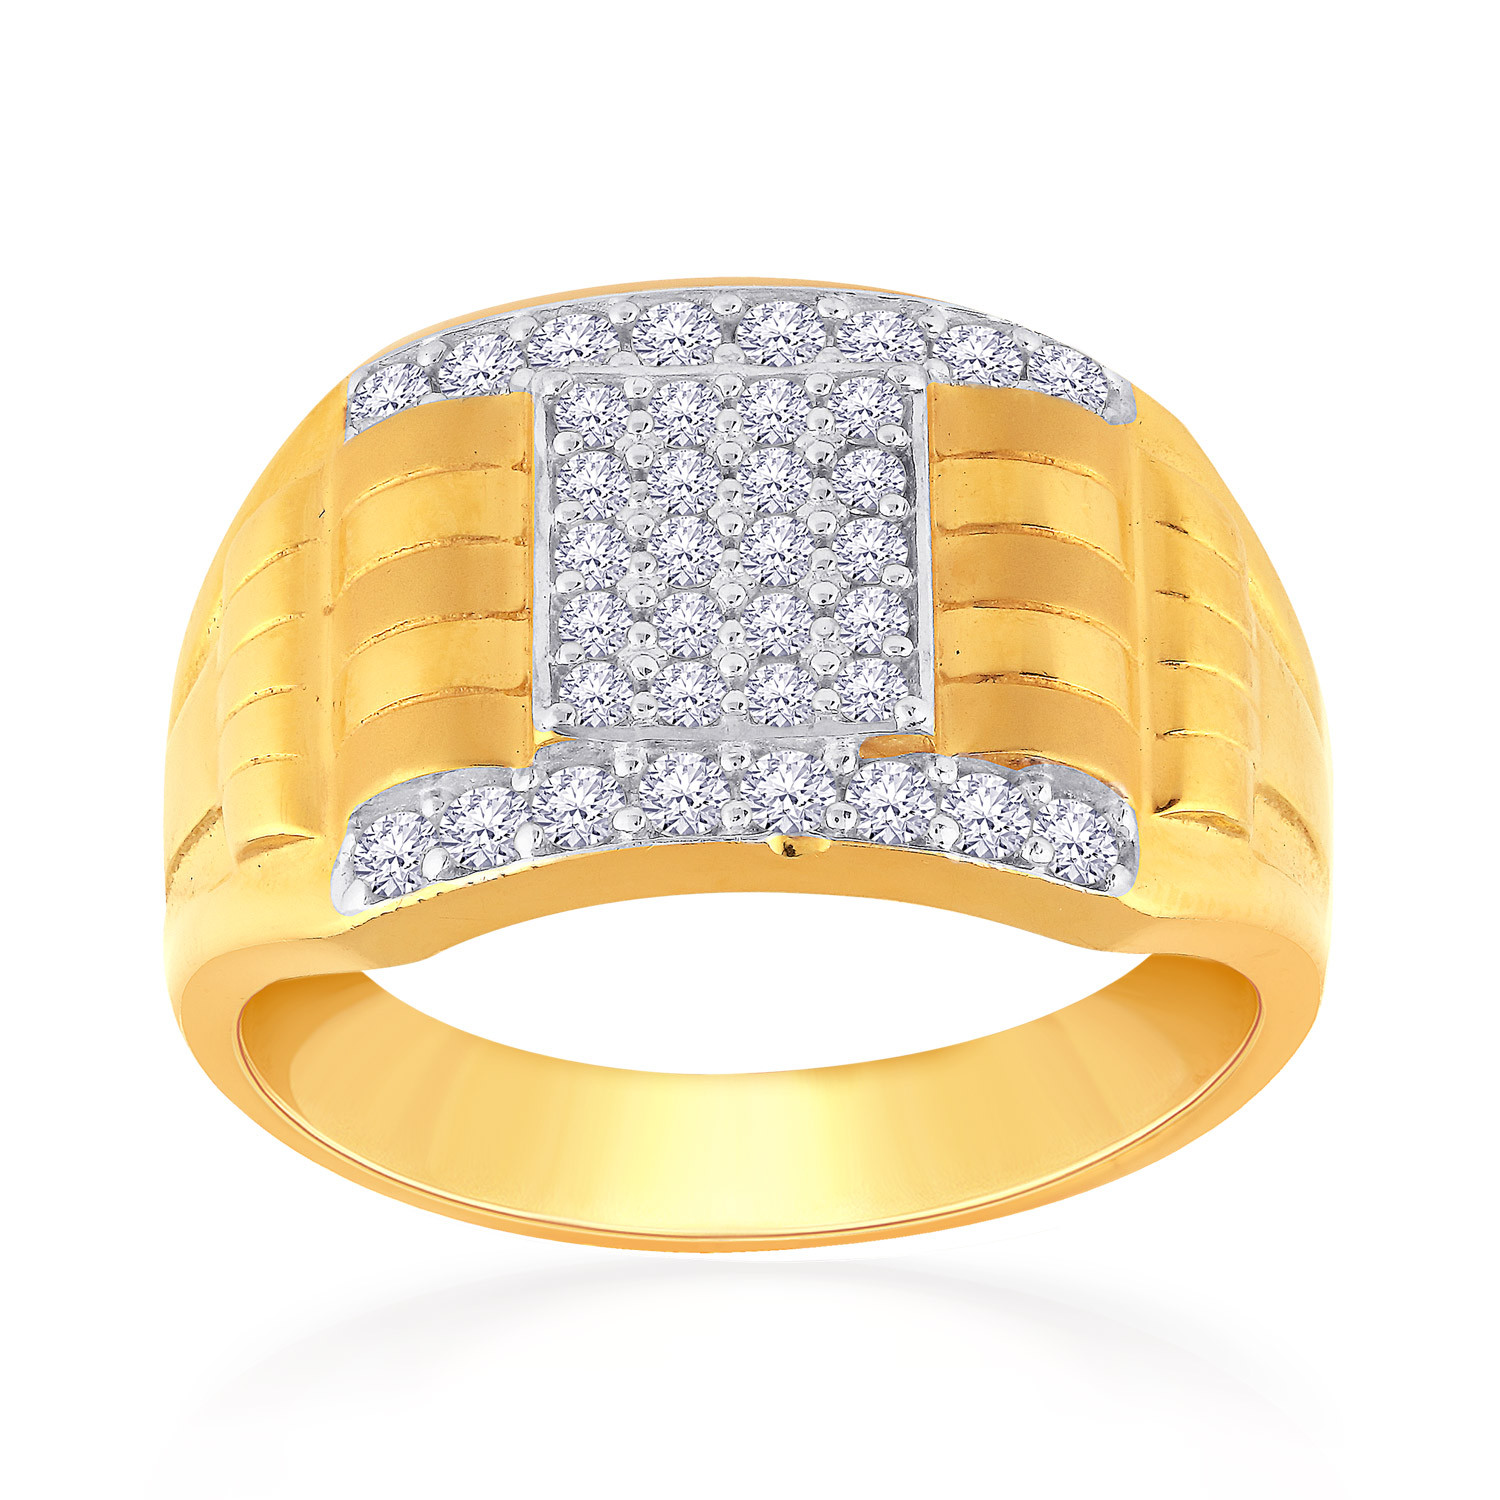 Buy Yellow Gold & Green Rings for Men by Malabar Gold & Diamonds Online |  Ajio.com